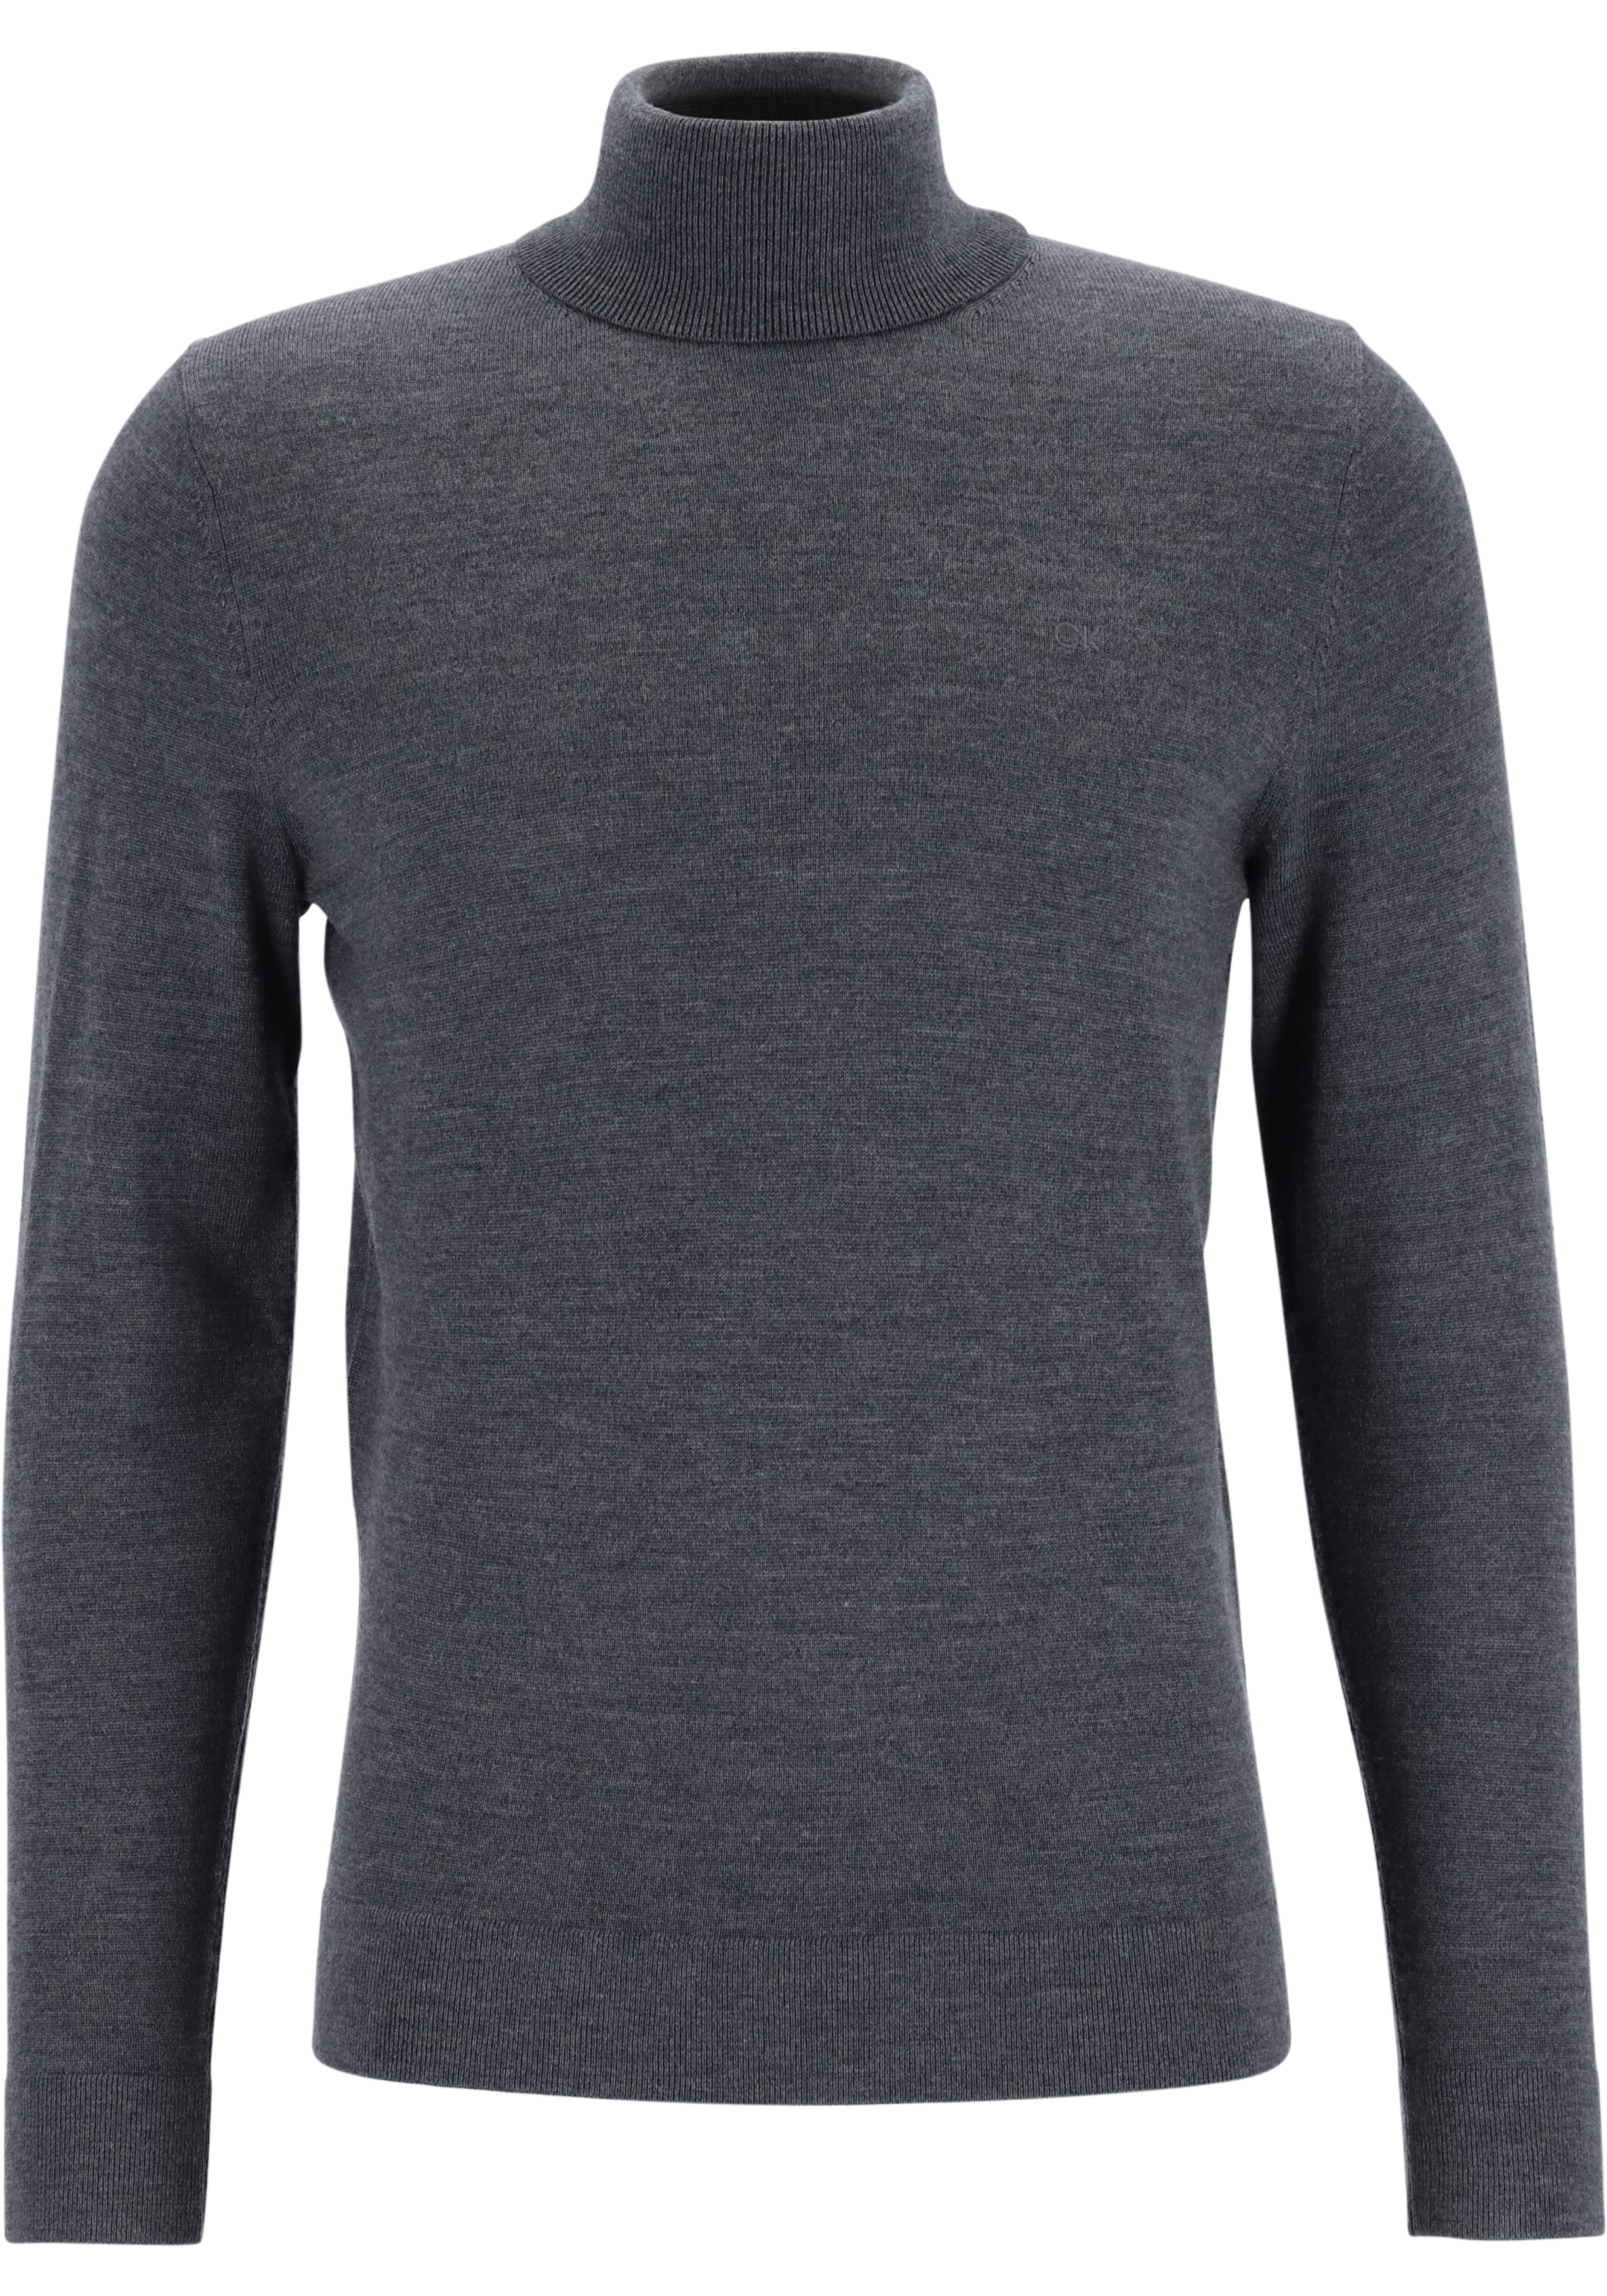 Calvin Klein coltrui wol, antraciet grijs melange - 20% Paaskorting alles